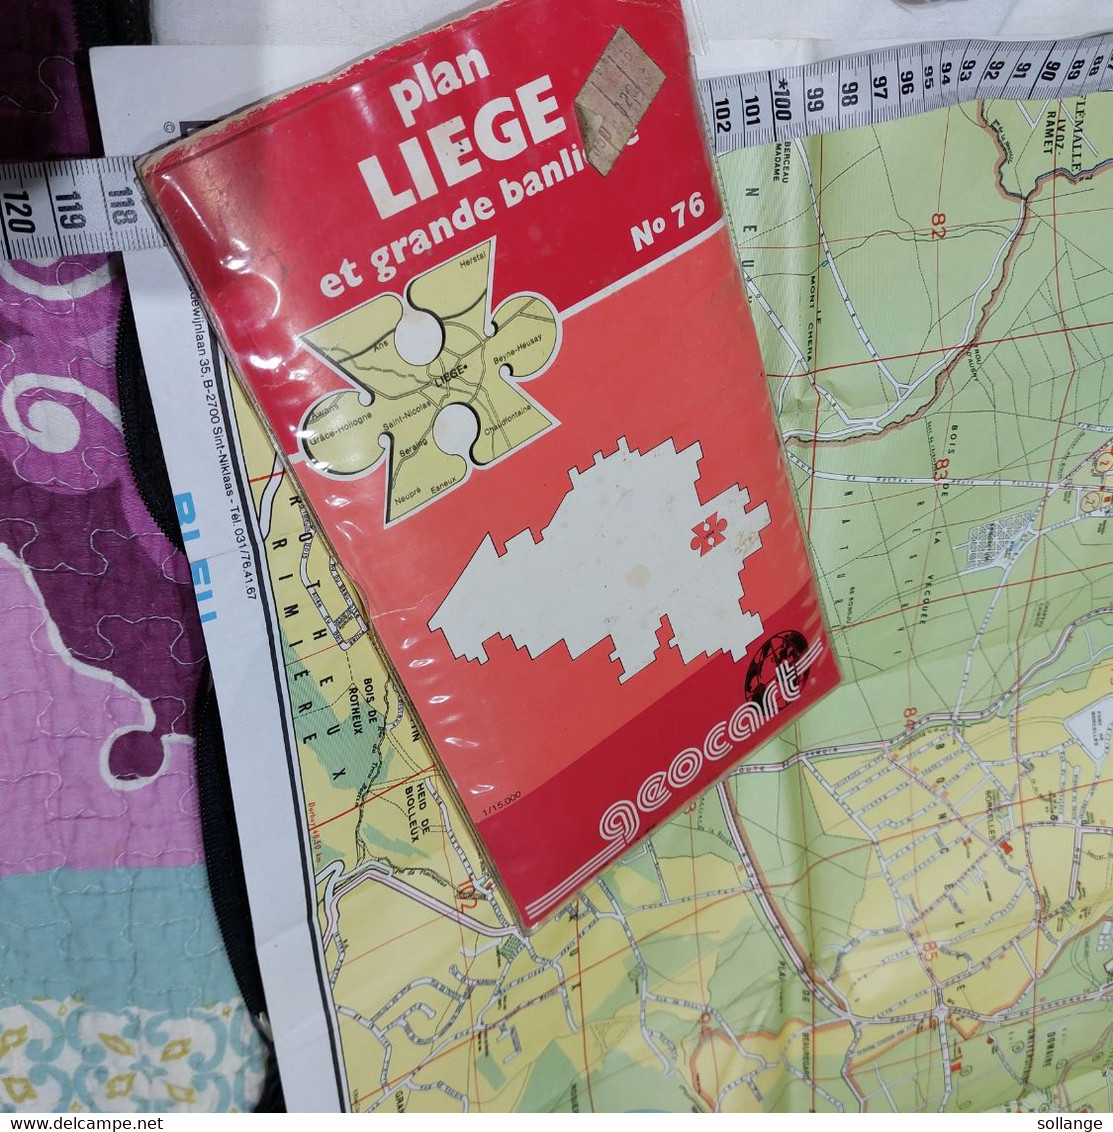 Geocart plan de Liège et grande banlieue n°76